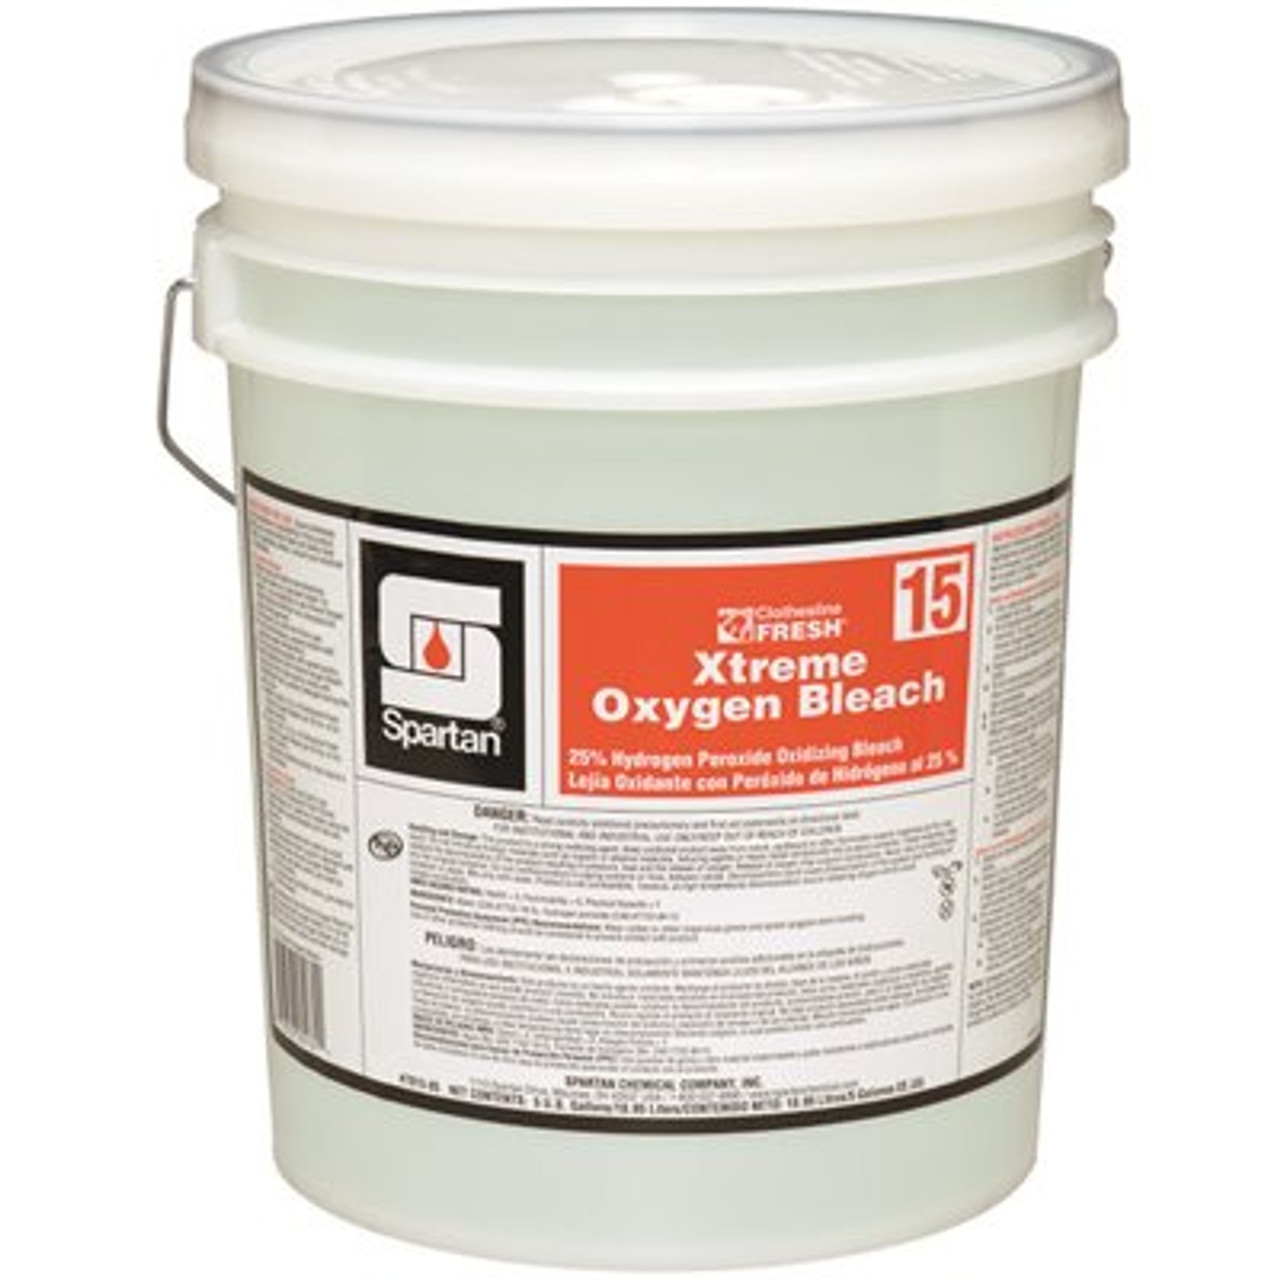 Spartan Chemical Co. Clothesline Fresh 5 Gallon Xtreme Oxygen Bleach